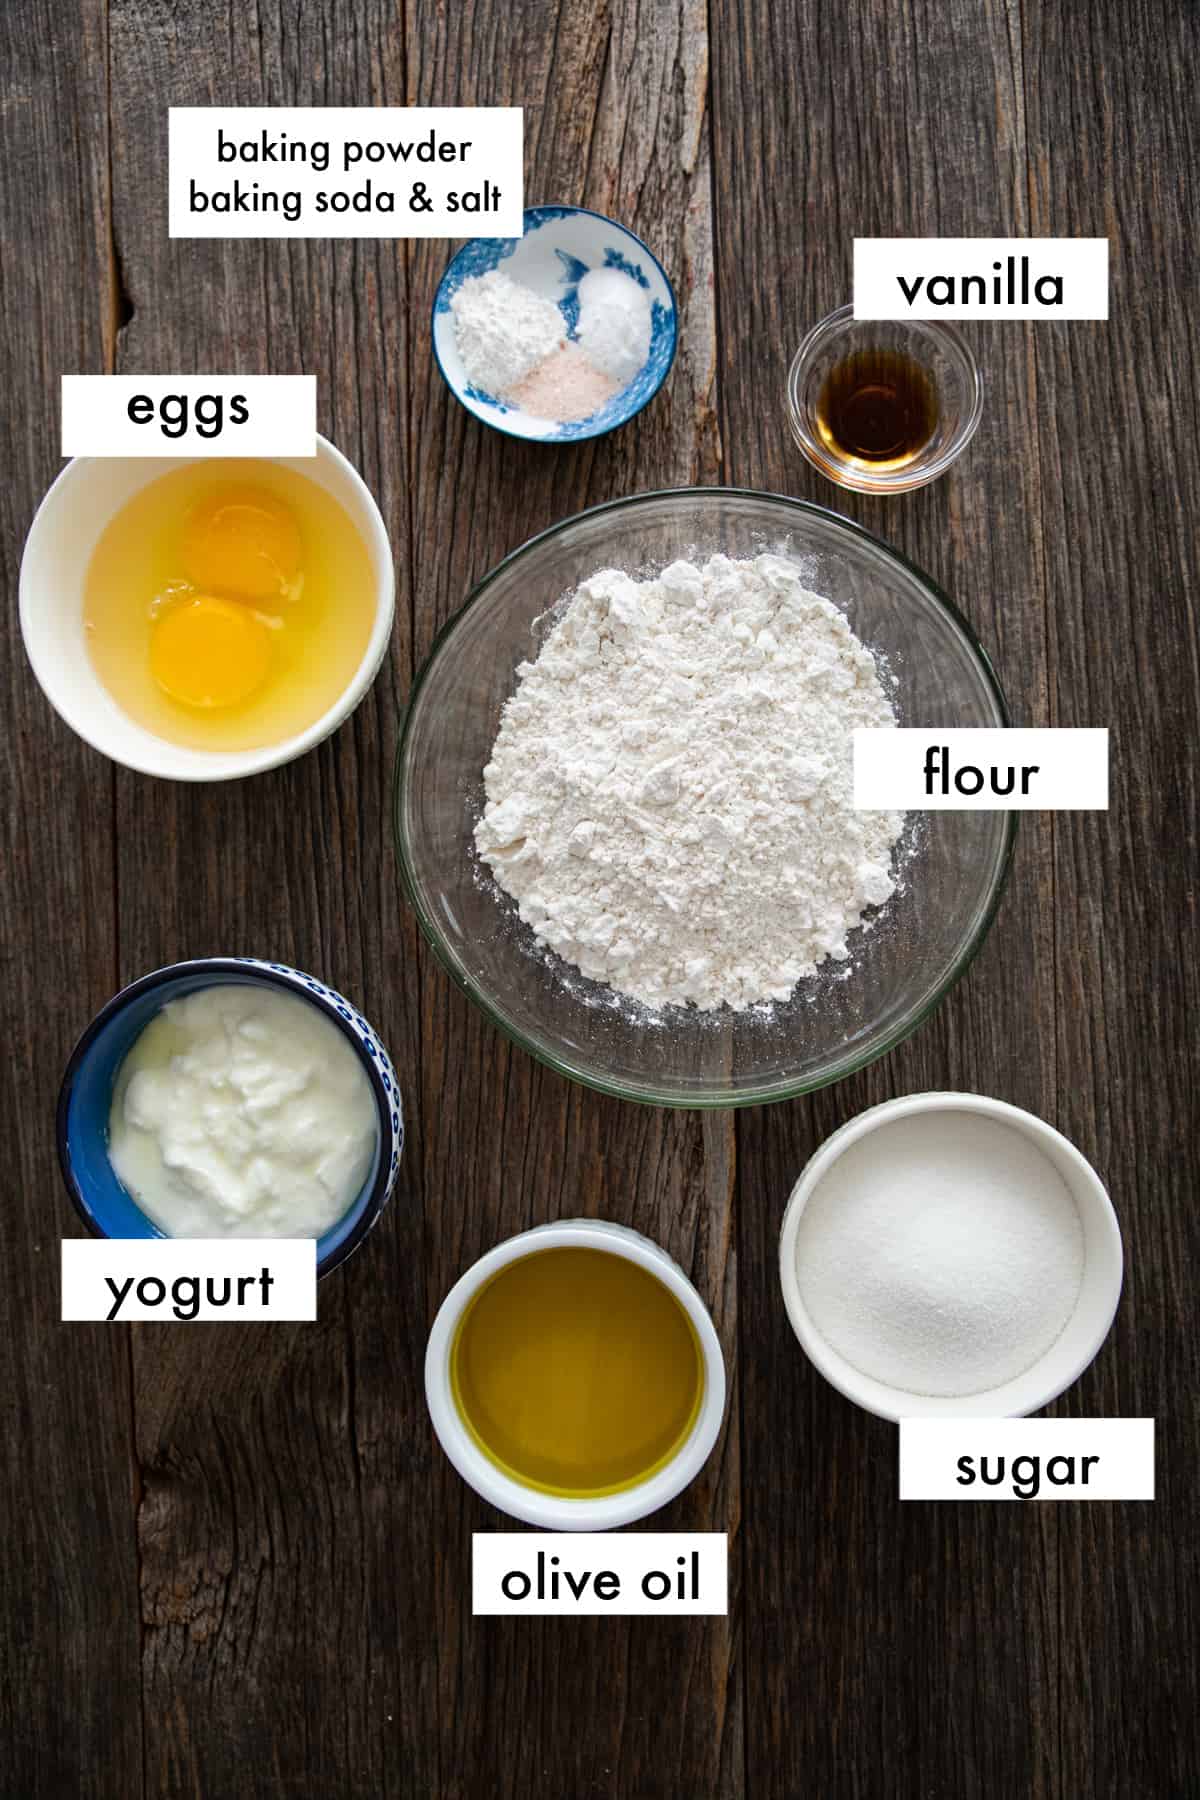 ingredients are olive oil, yogurt, eggs, sugar, vanilla, baking powder, baking soda and salt.